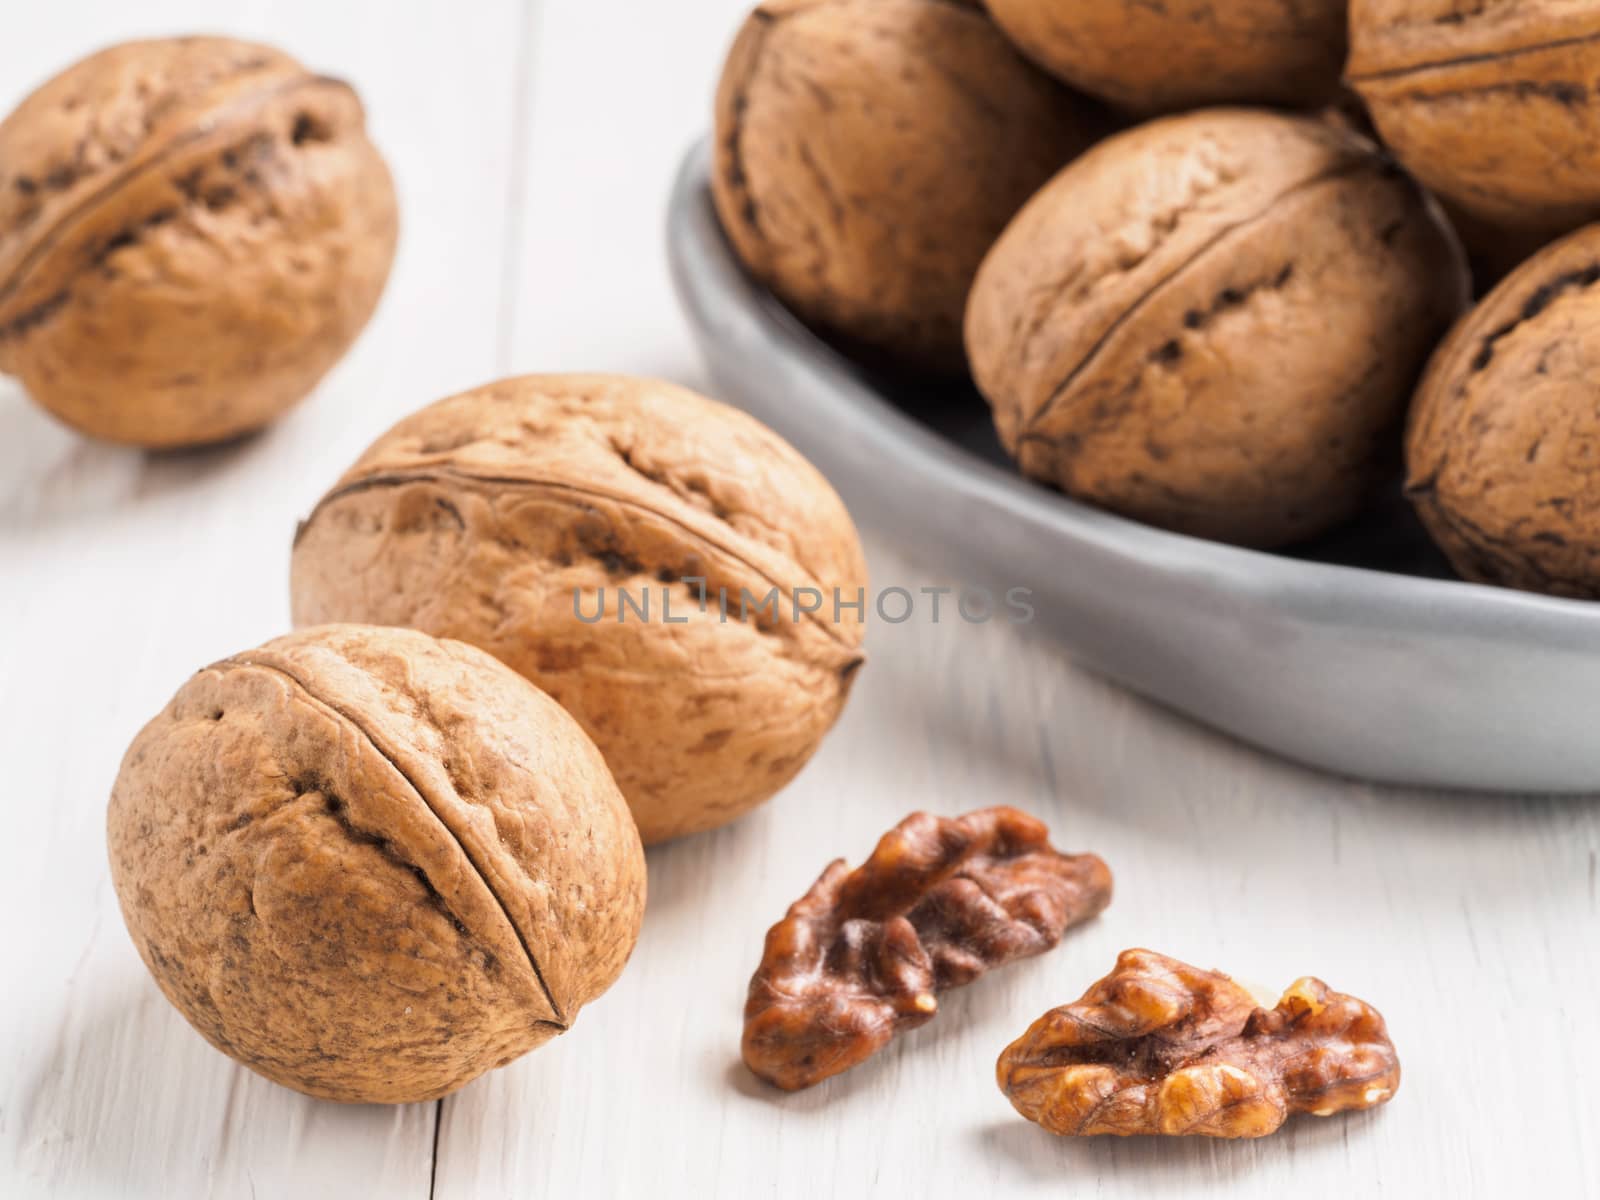 inshell walnut on white wooden background by fascinadora